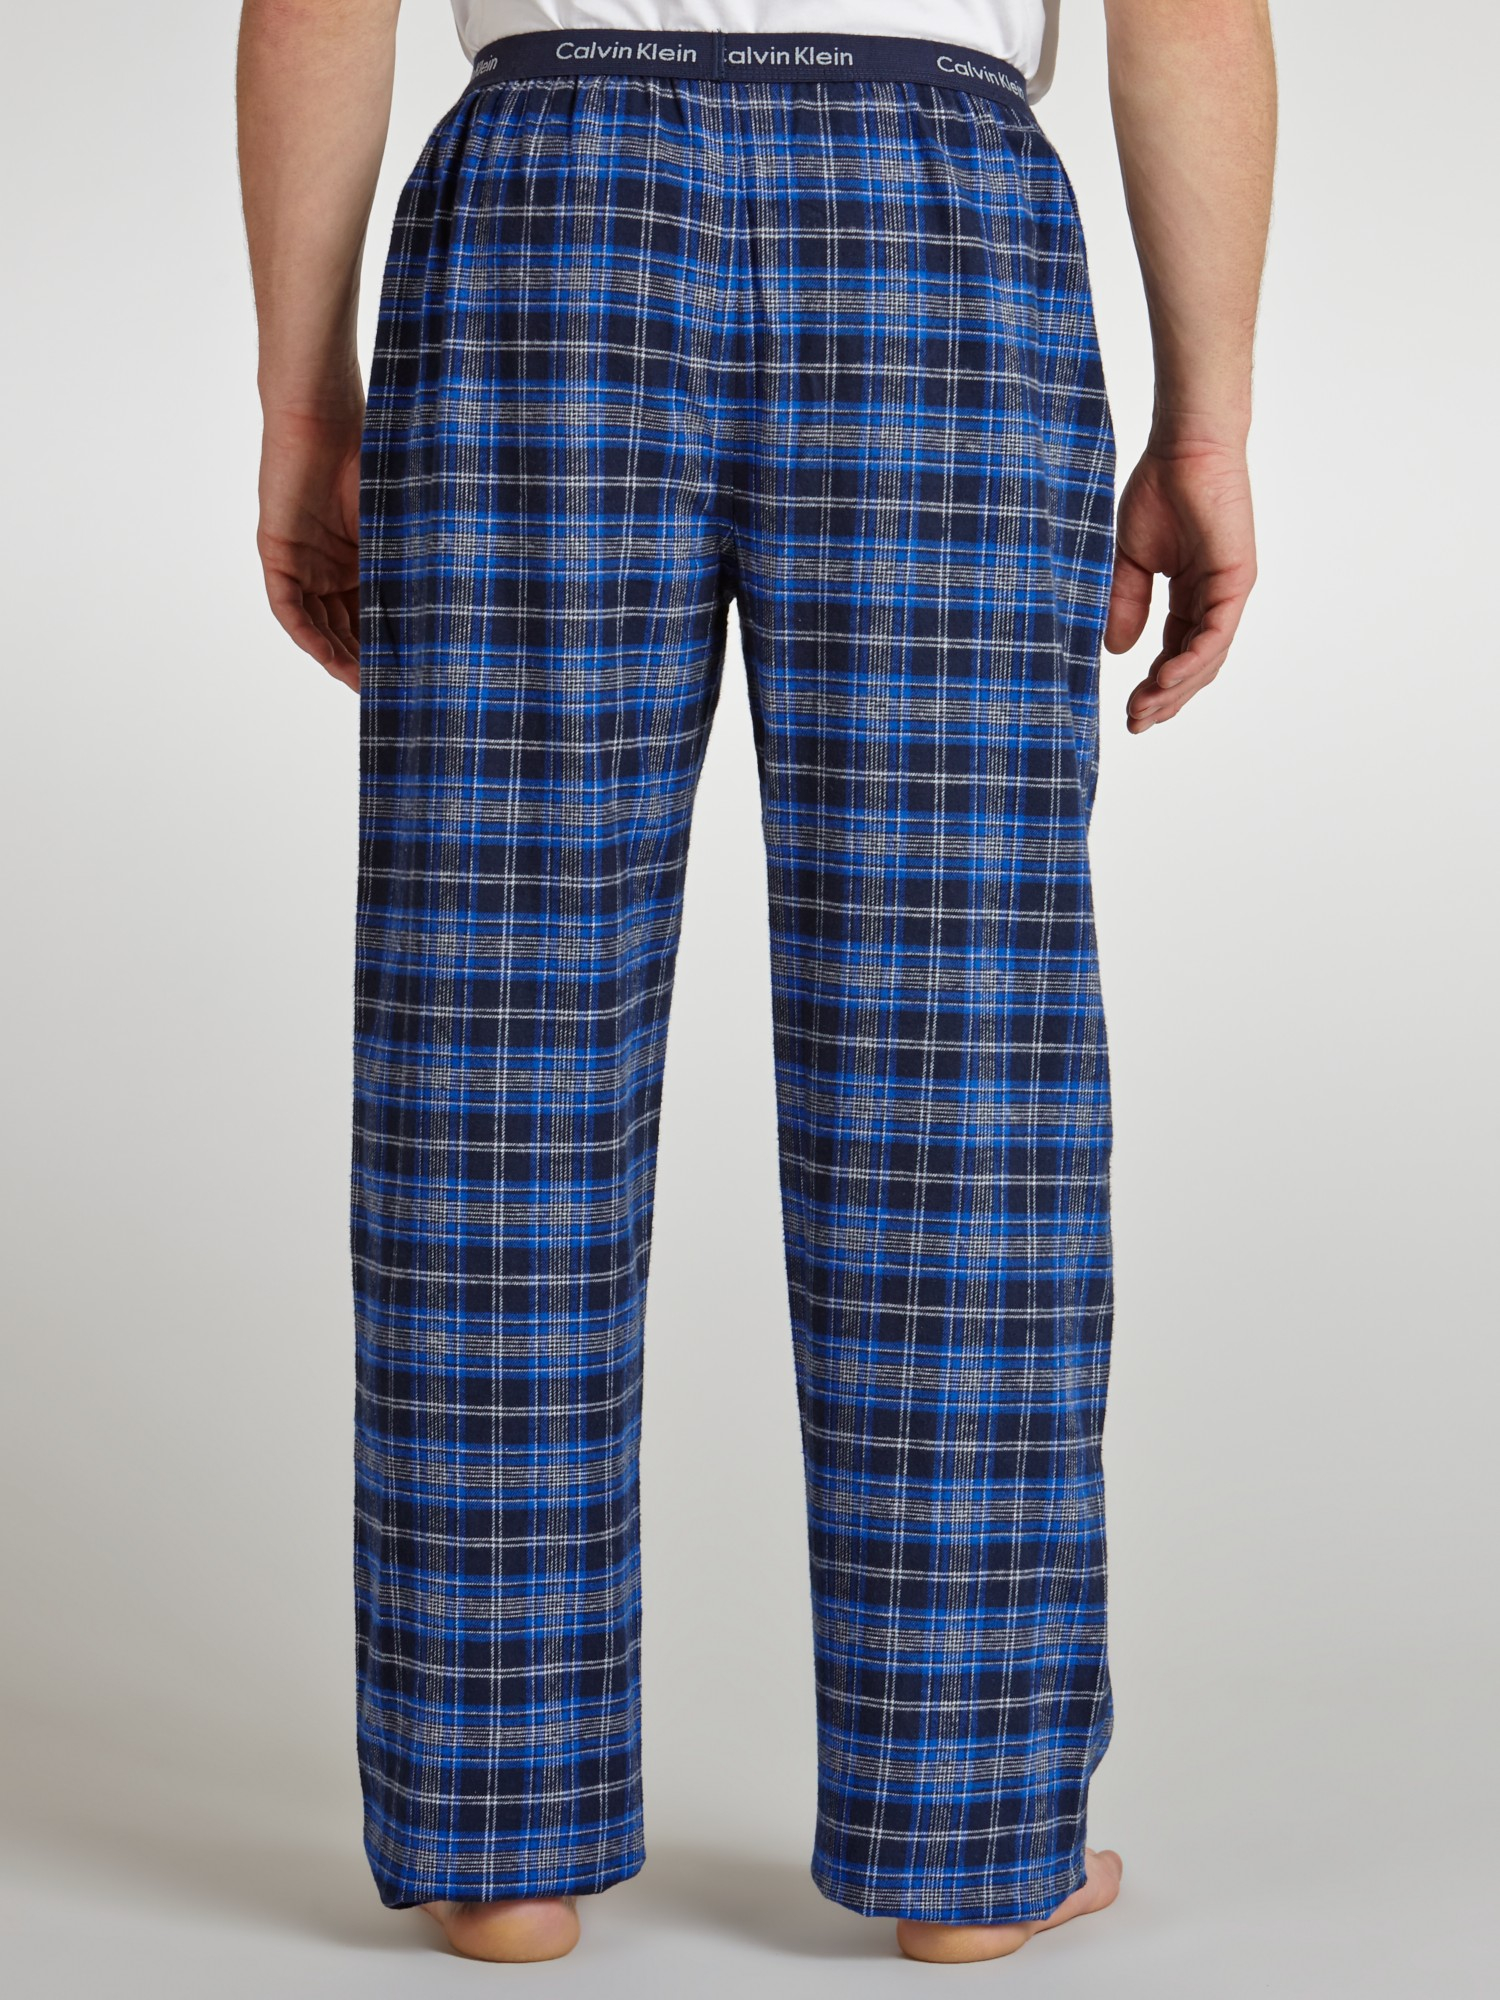 Calvin Klein Flannel Check Pyjama Bottoms in Blue for Men | Lyst UK